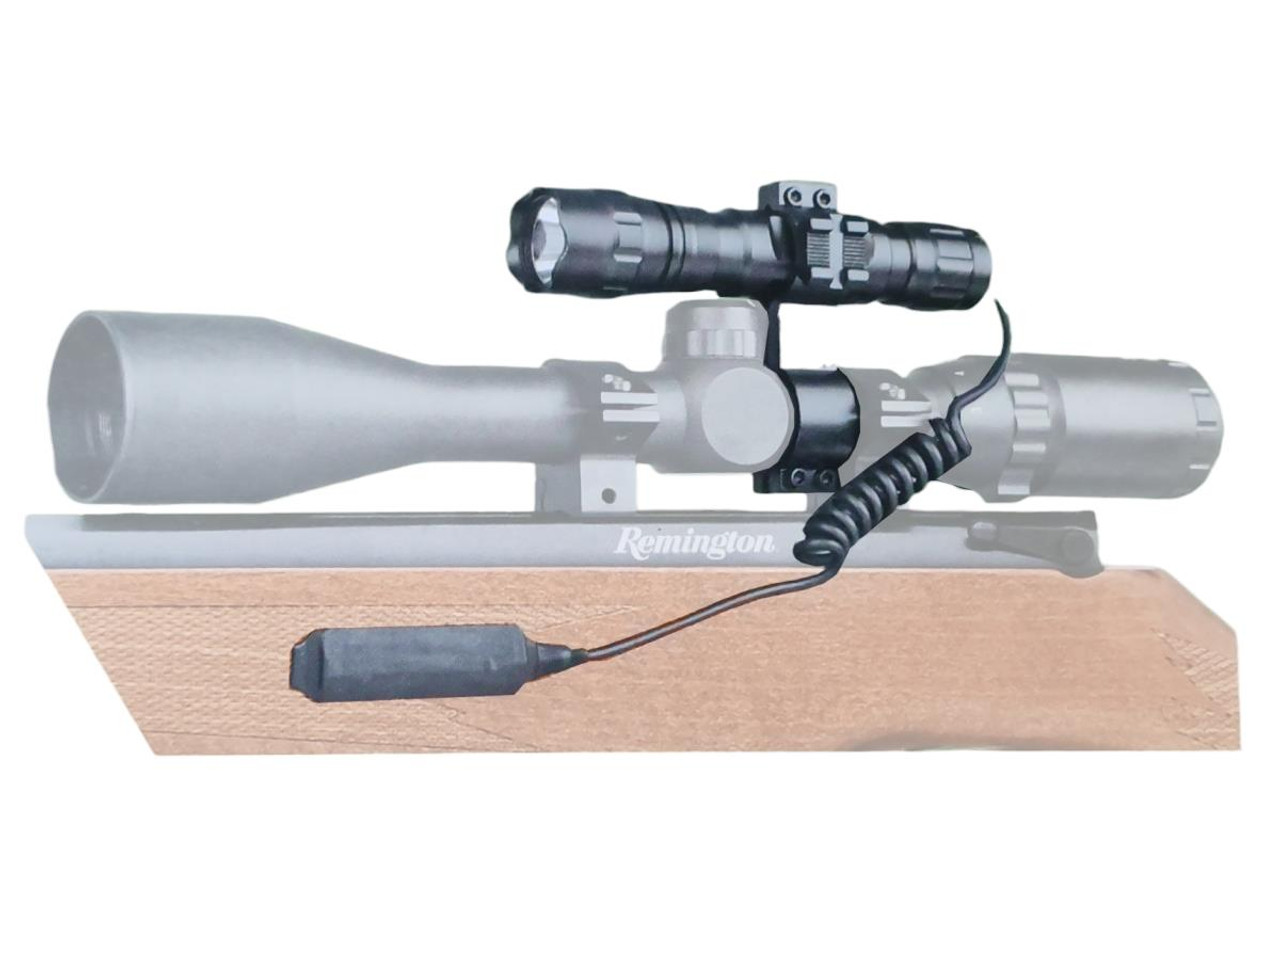 Remington TactLED LED Gun Flashlight Hunting Lamp 1200 Lumens with Mounts